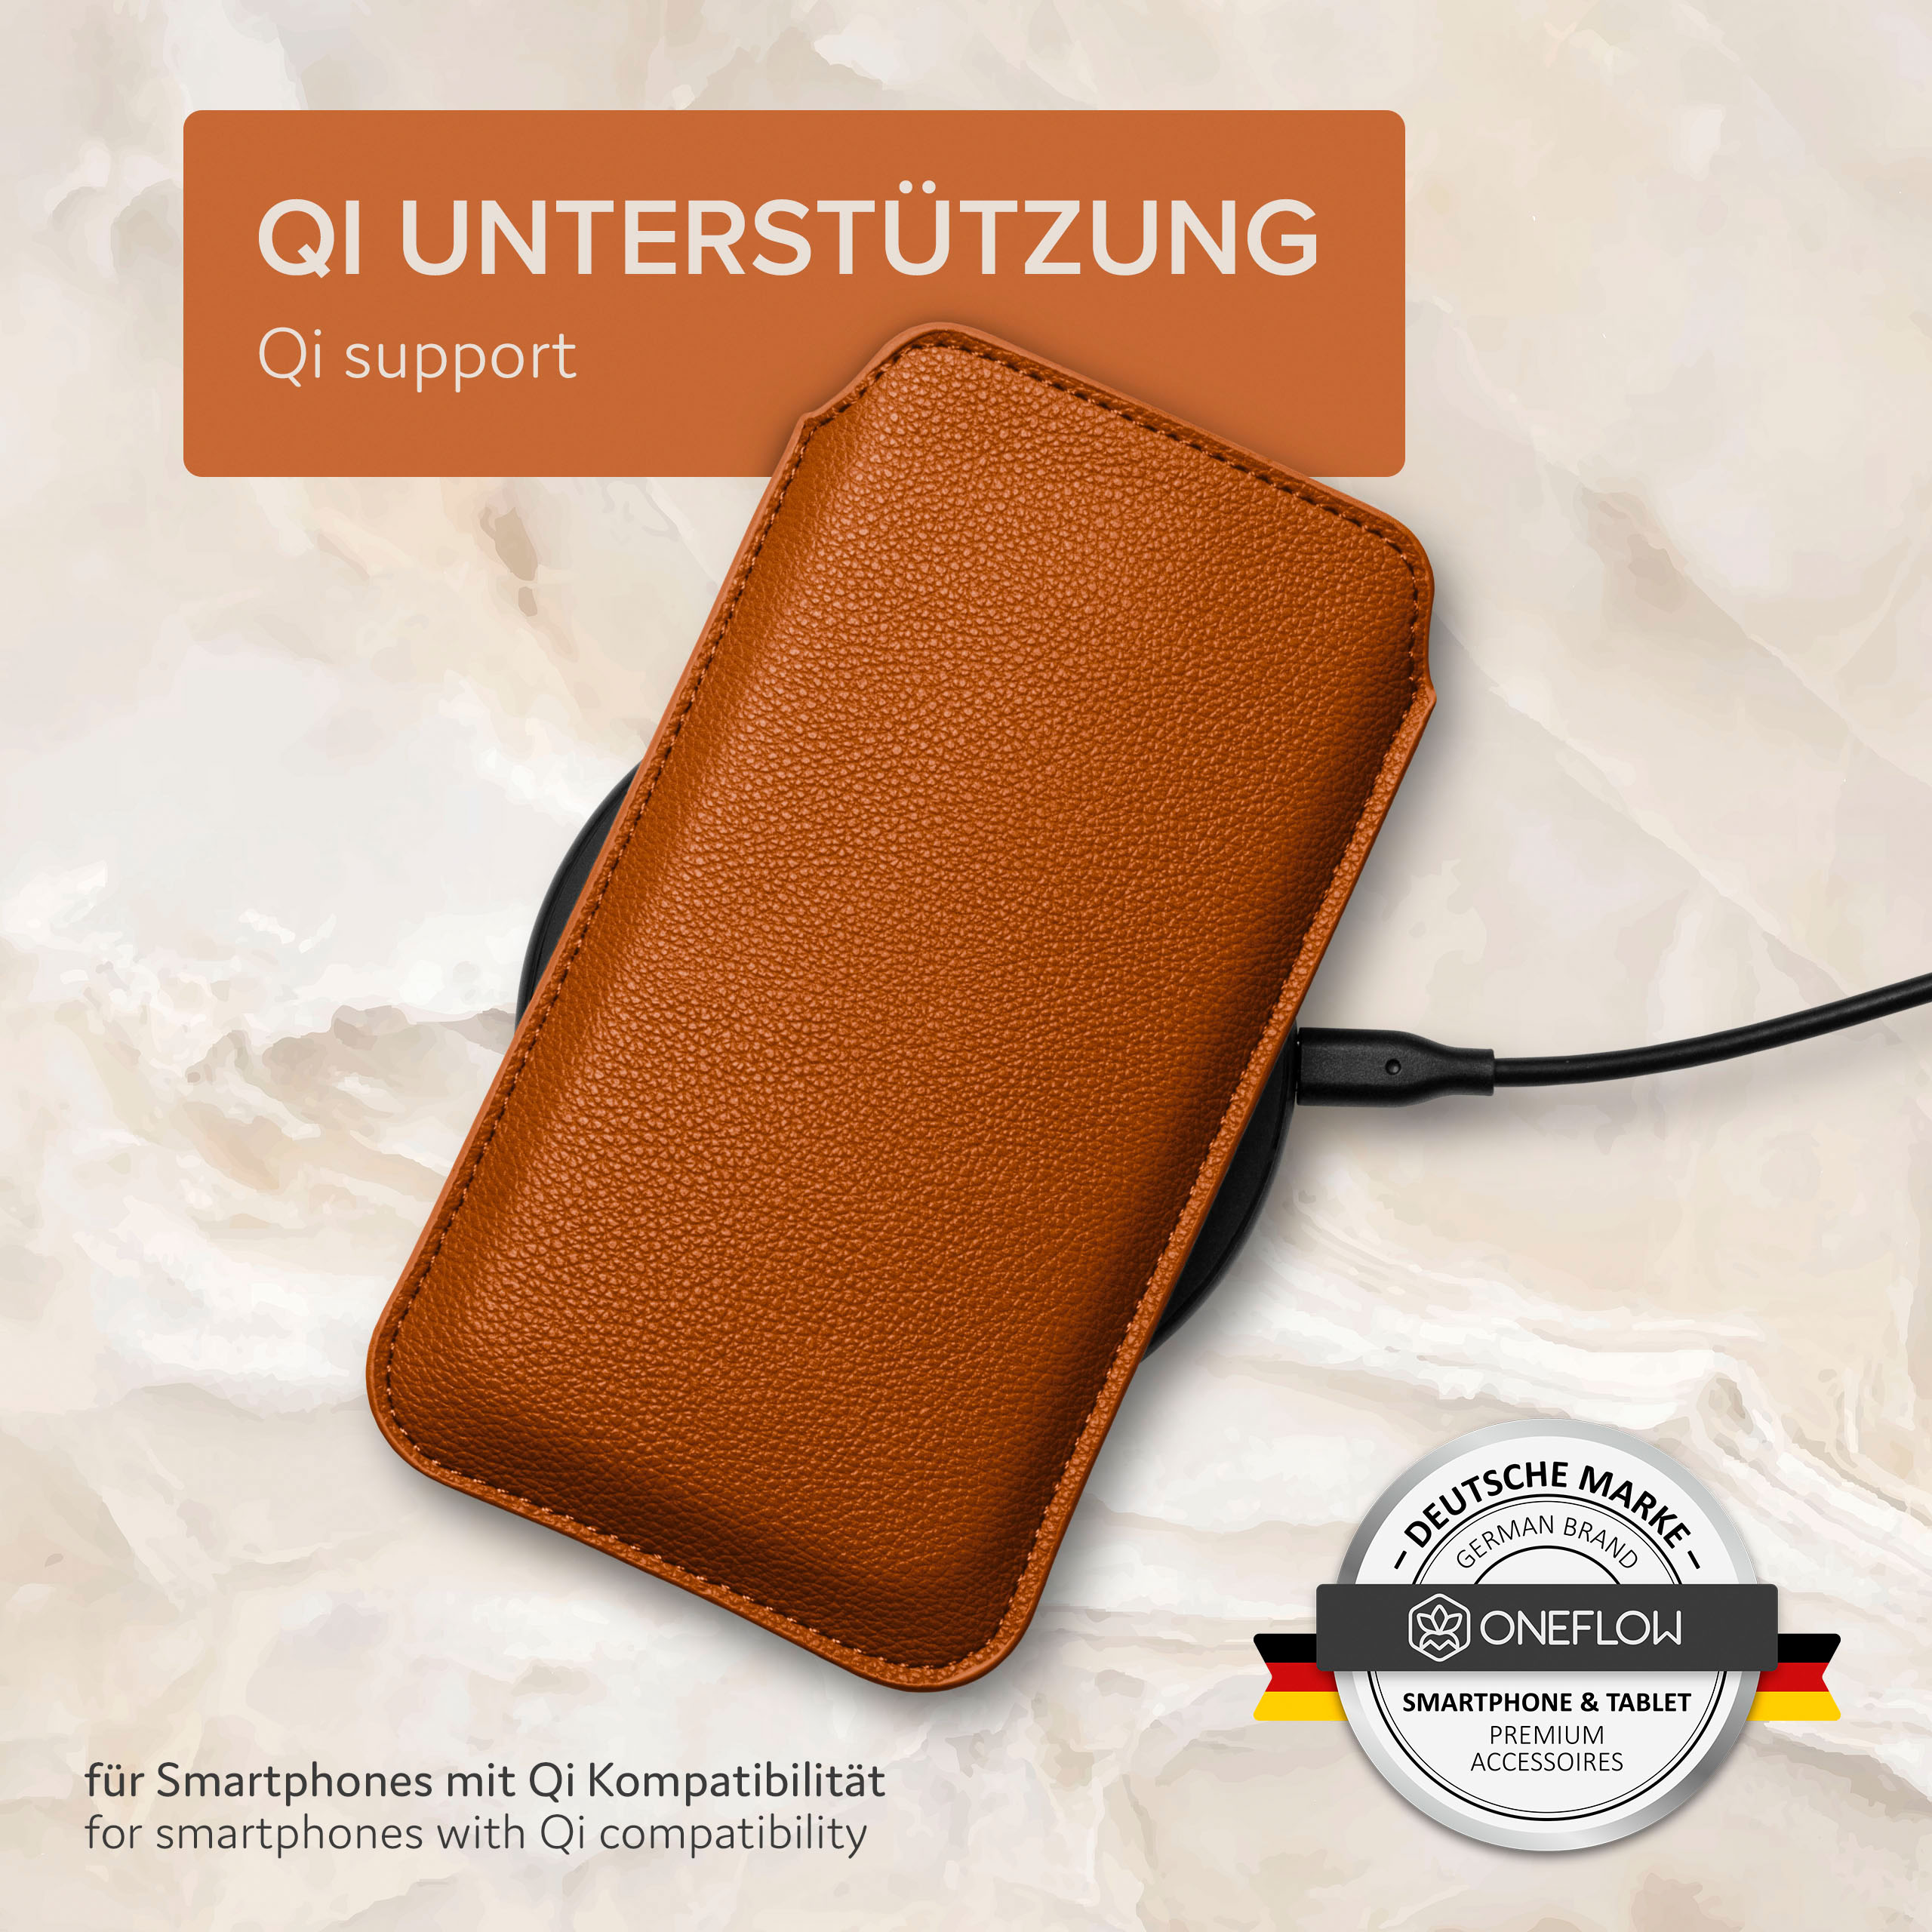 Compact, Full Cover, ONEFLOW Xperia Z1 mit Sattelbraun Zuglasche, Einsteckhülle Sony,